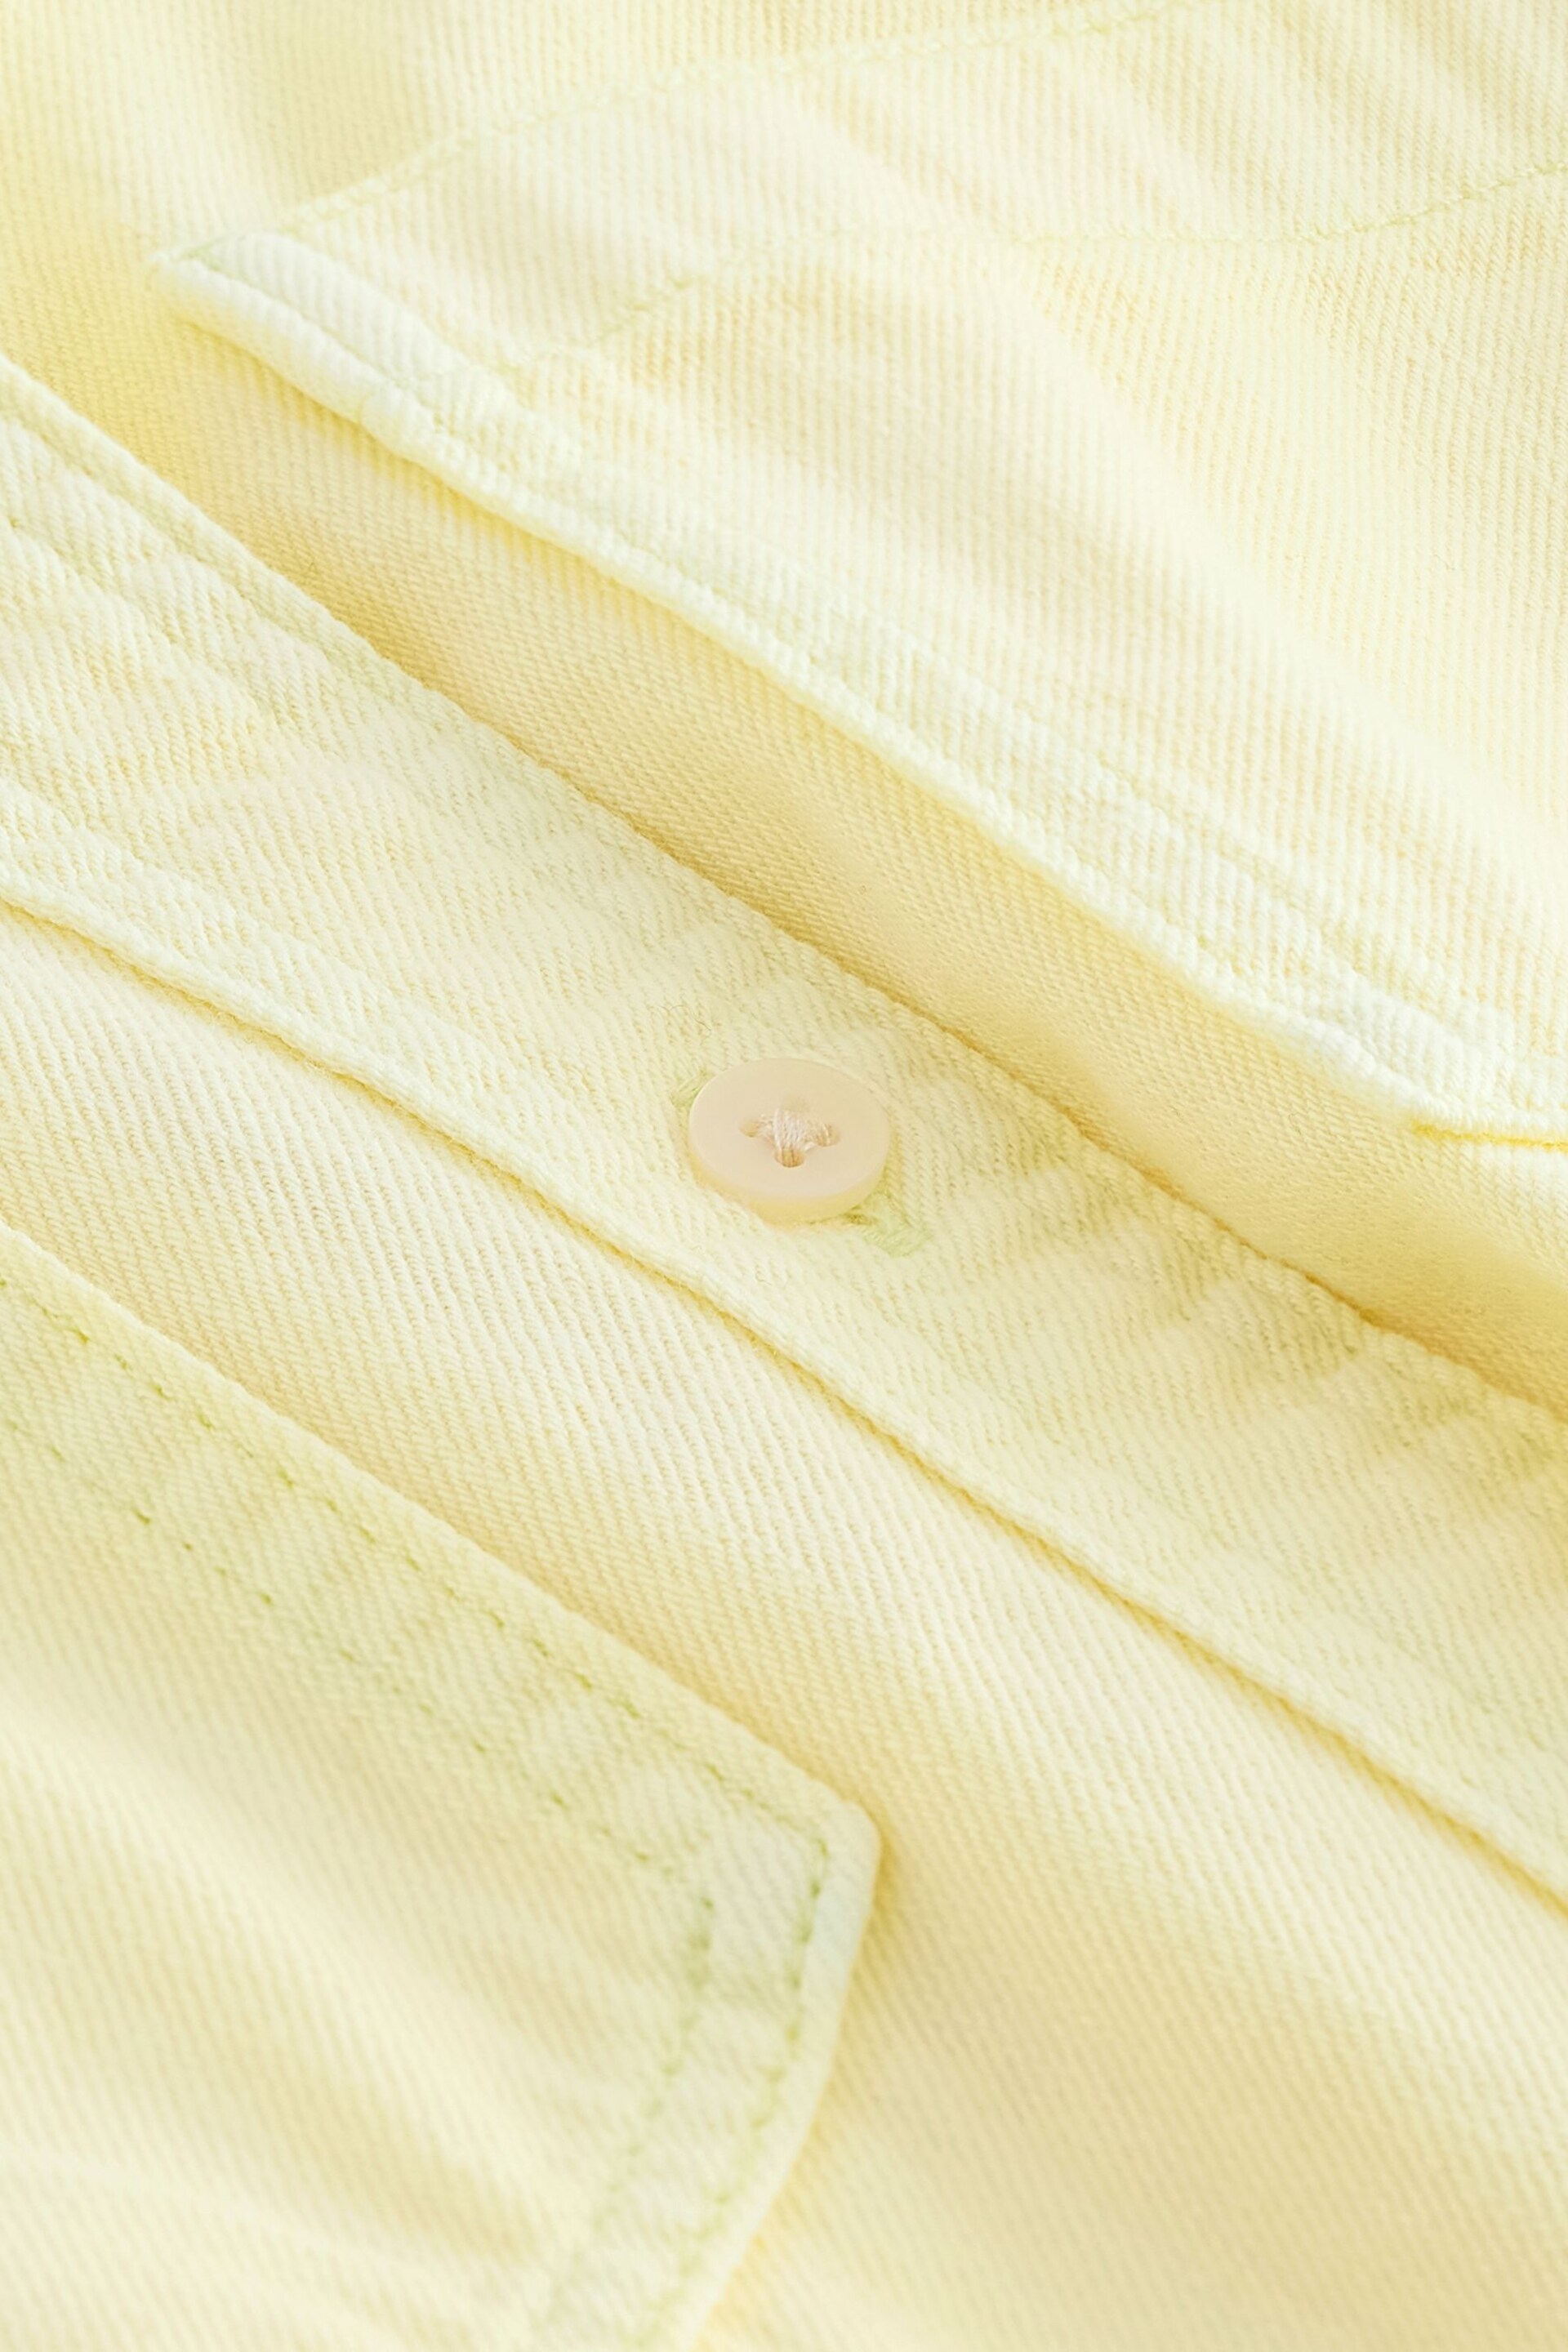 Lemon Yellow Cropped Denim Shirt - Image 6 of 6